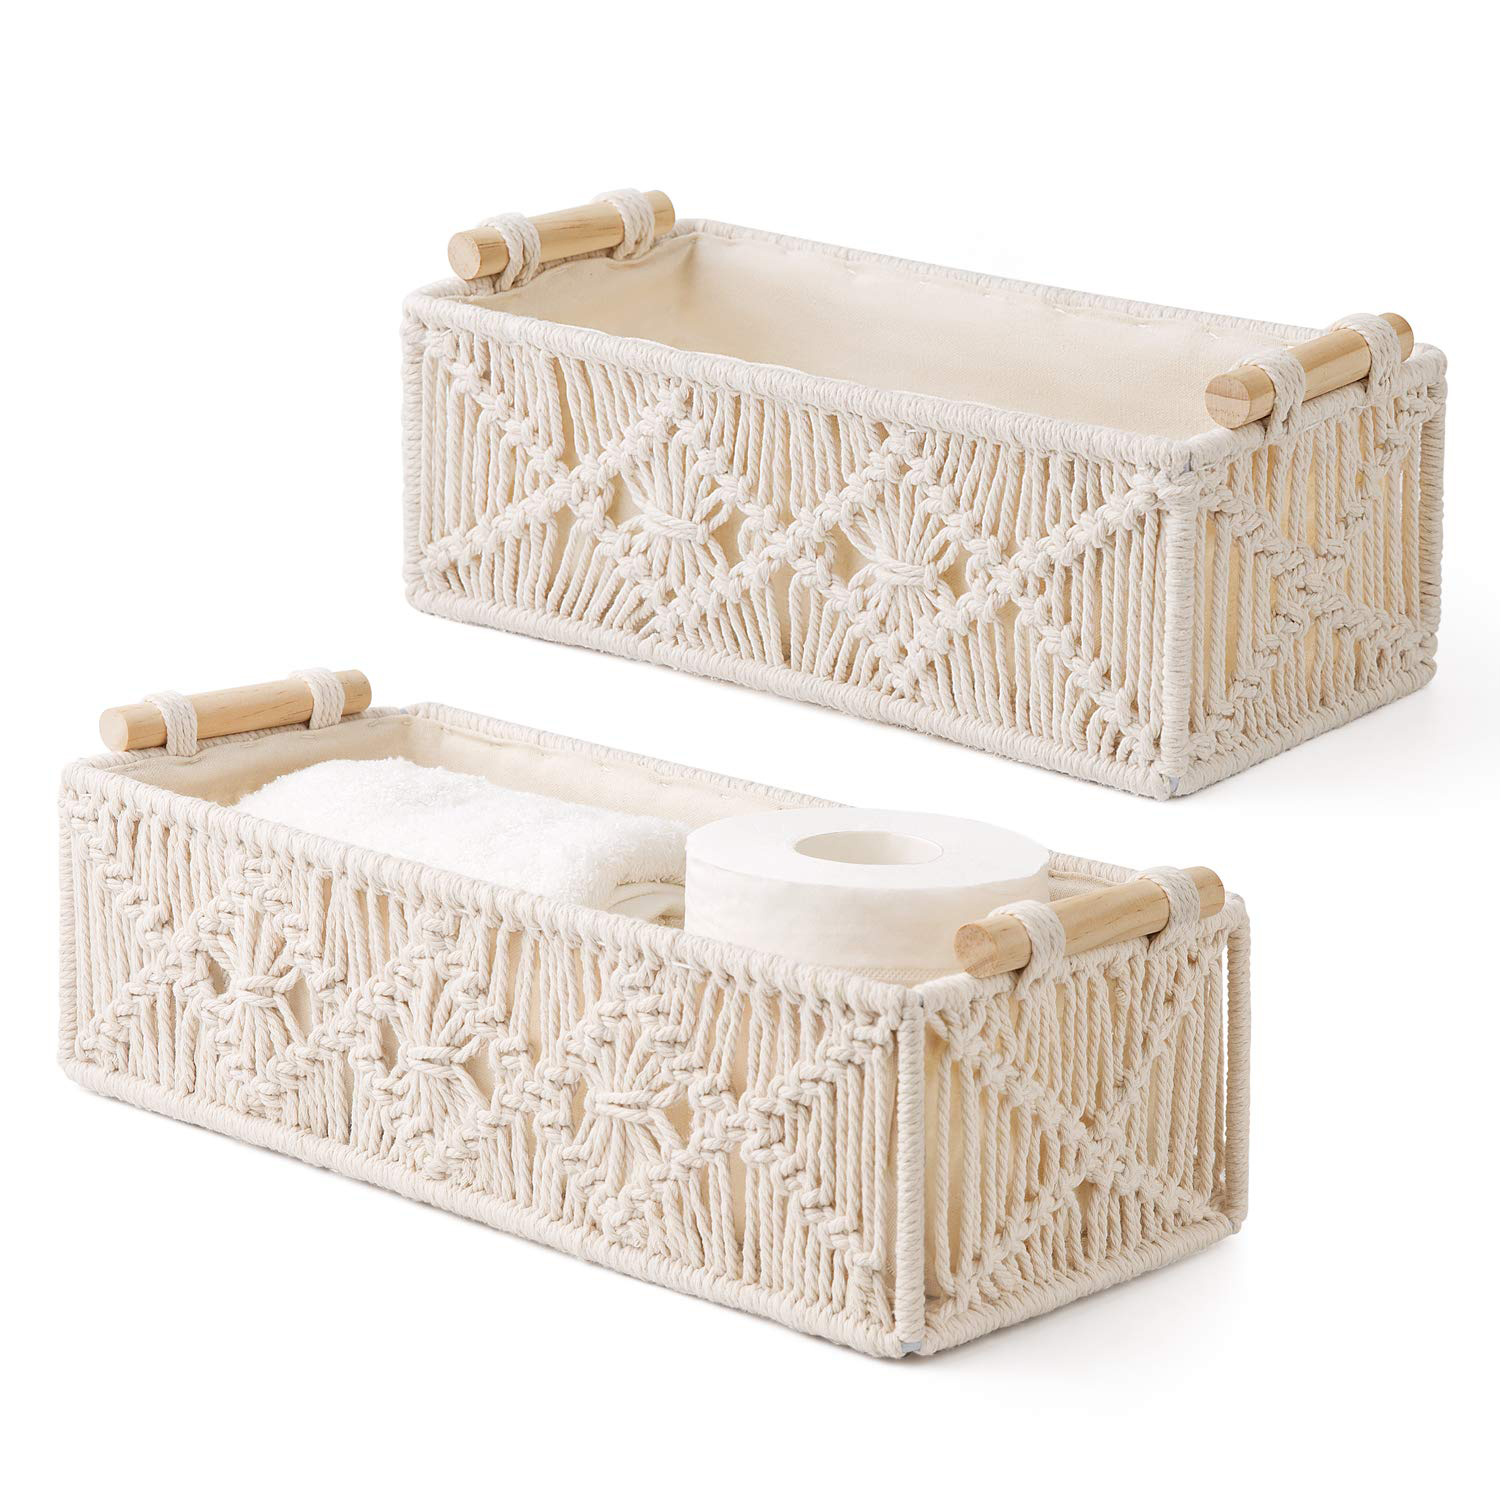 cotton macrame storage decorative hamper baskets manufacturer, exporter and supplier